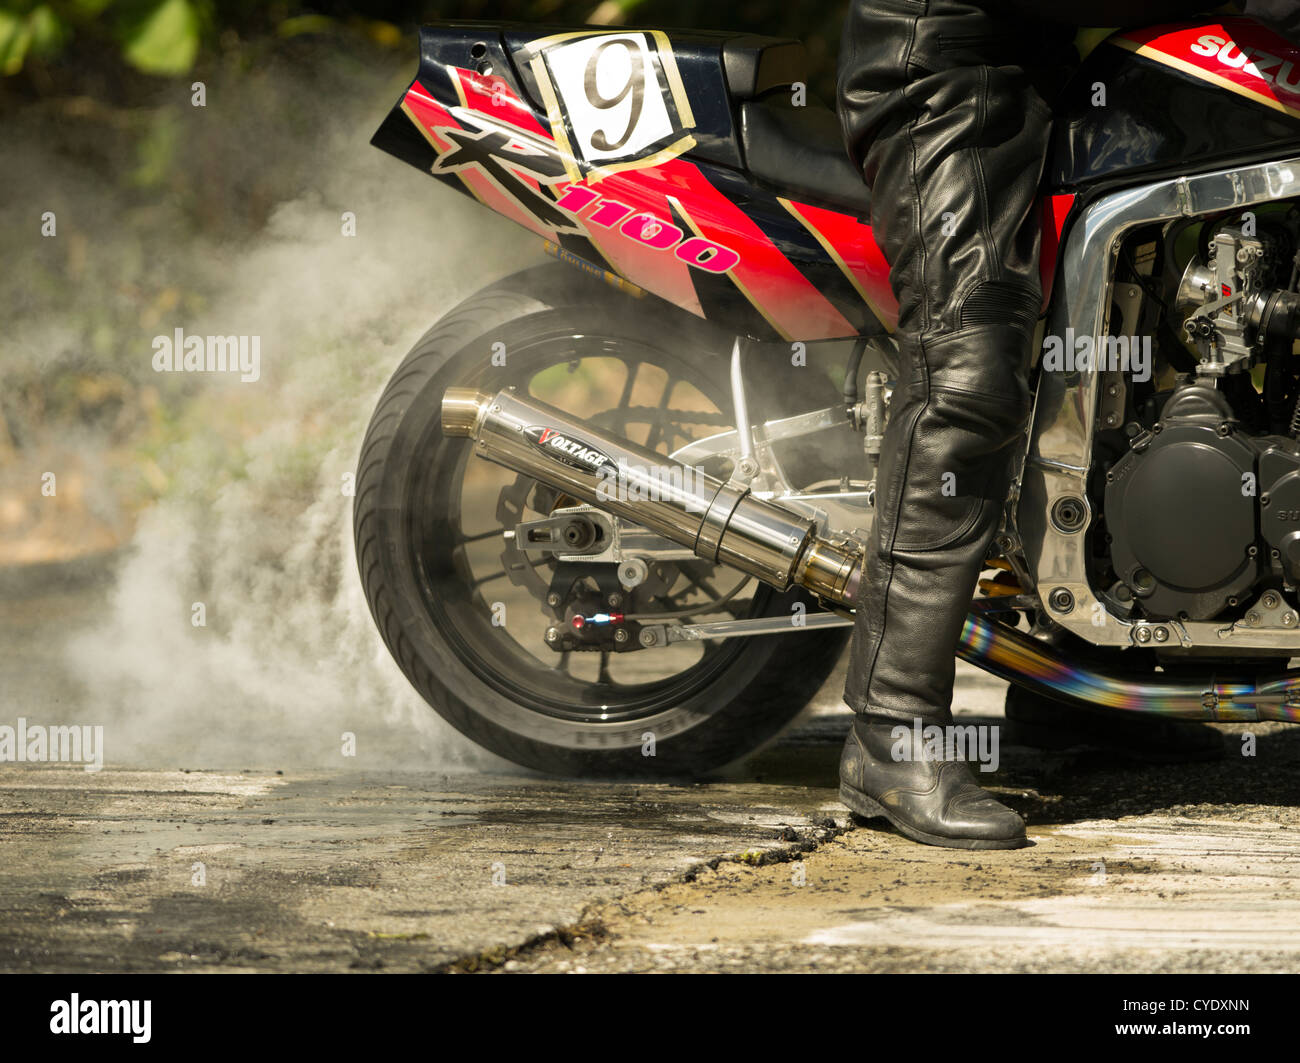 Motorbike smoking rear tire burnout. Stock Photo